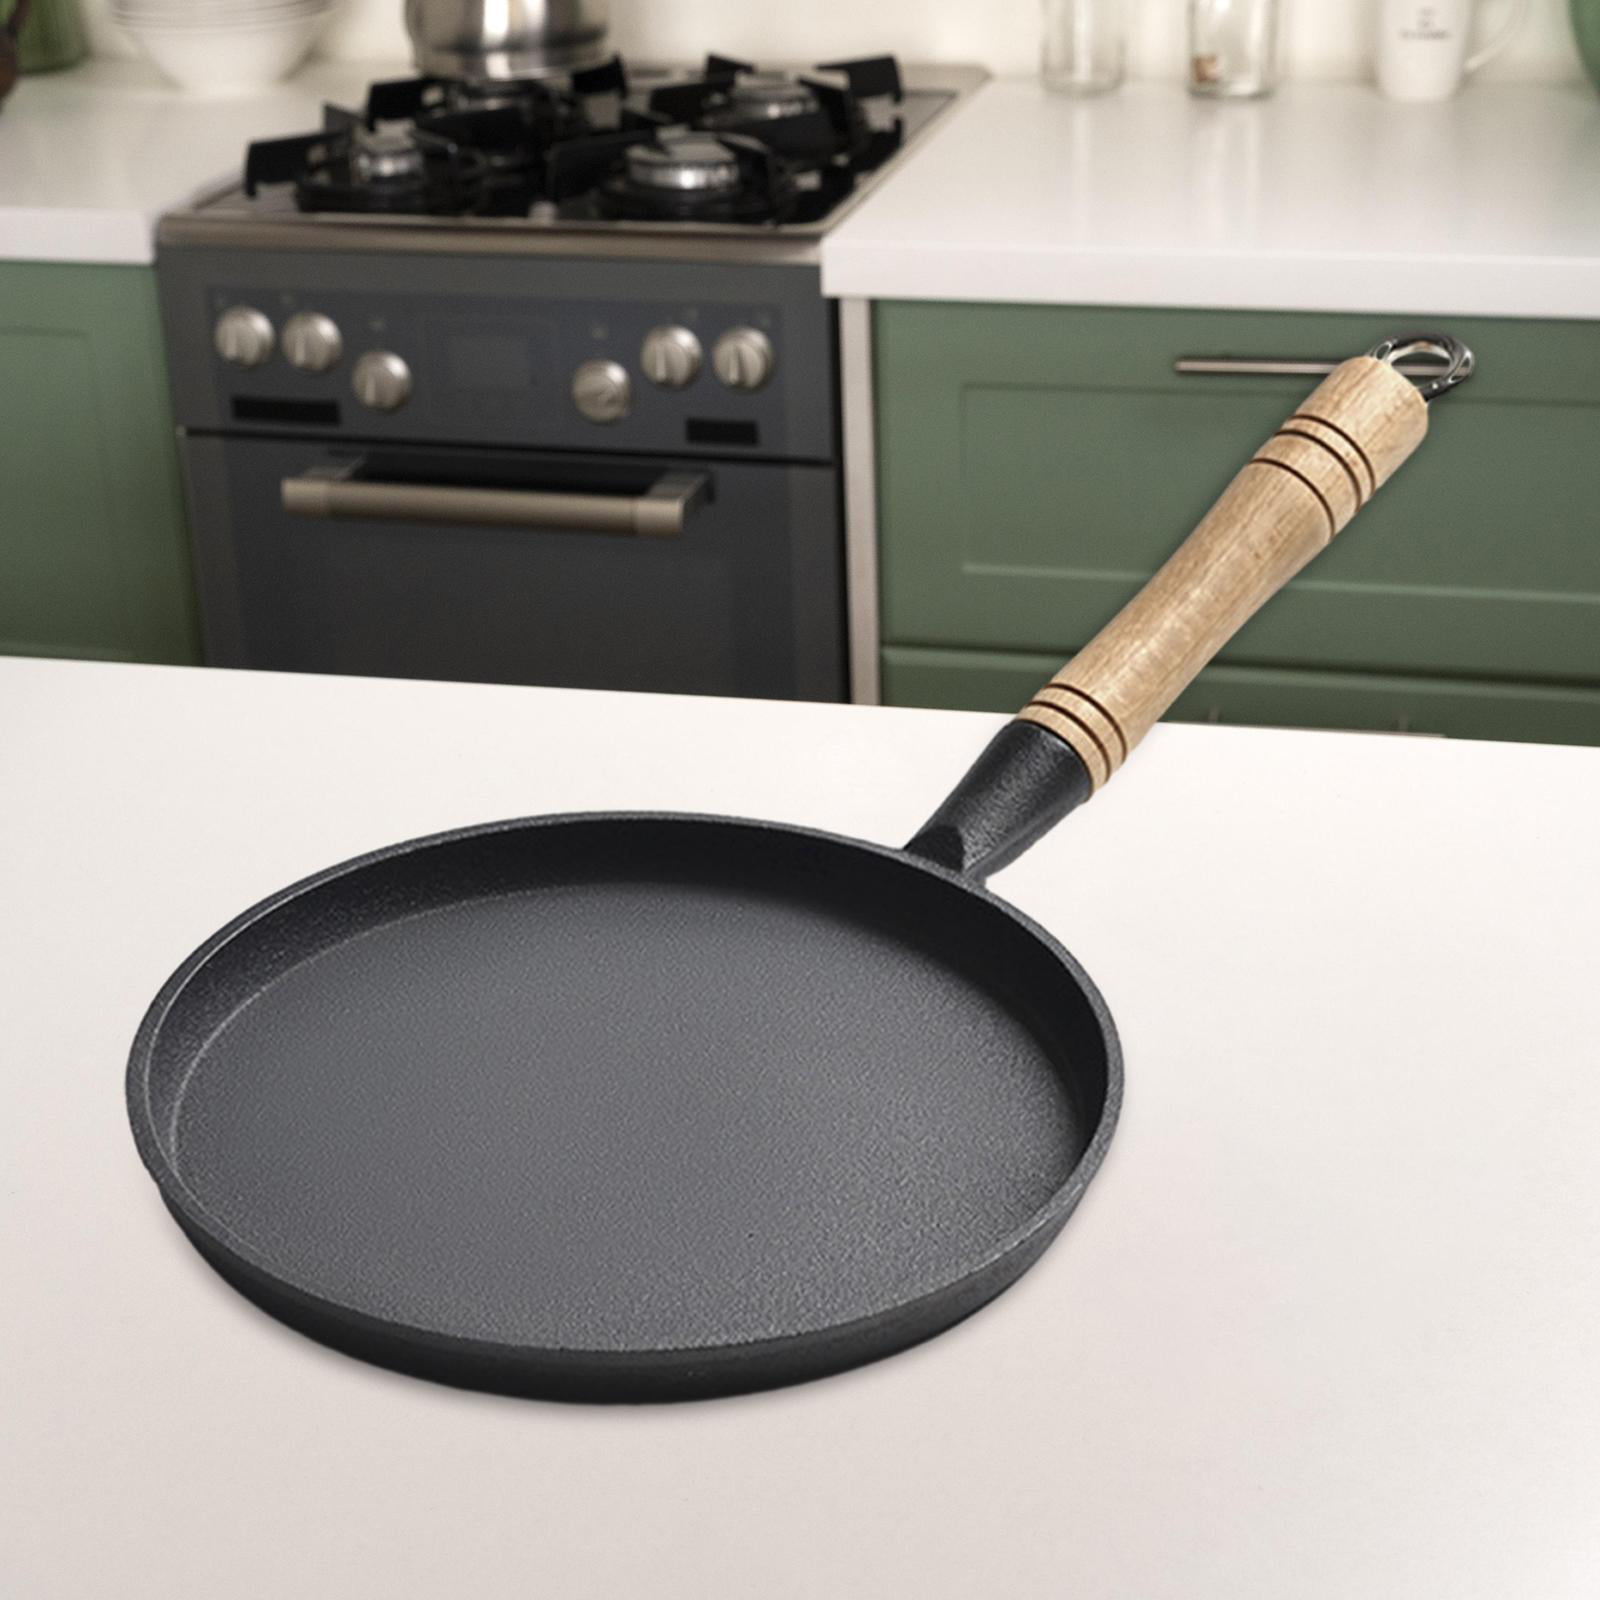 Online-Shop - Buy Pancake pan with wooden handle